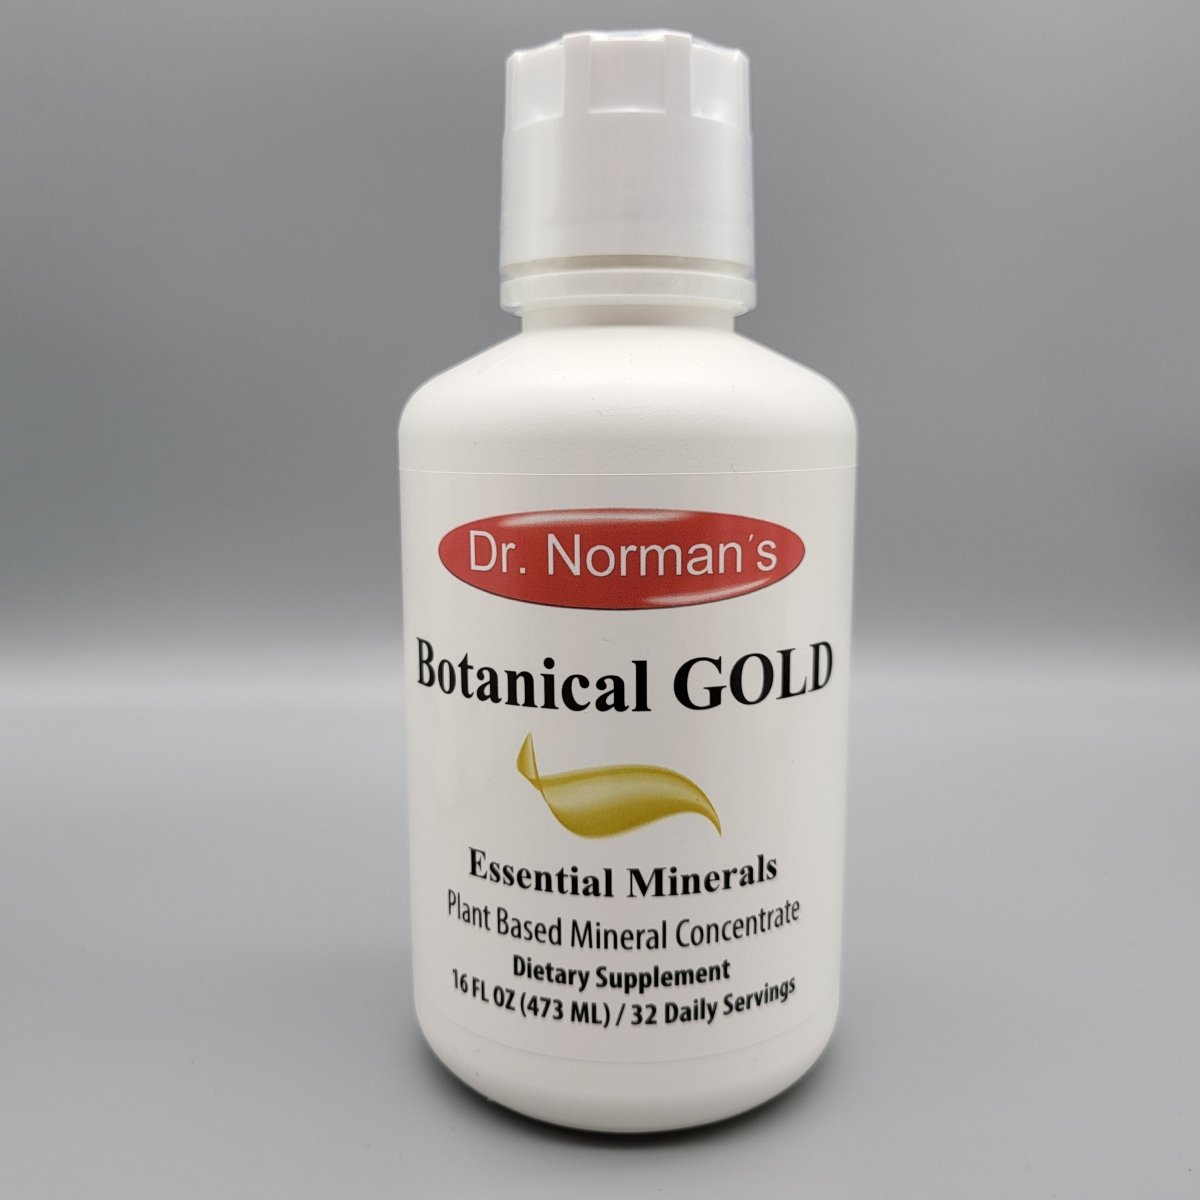 DR. NORMAN'S ESSENTIAL MINERALS - BOTANICAL GOLD (16 OZ)